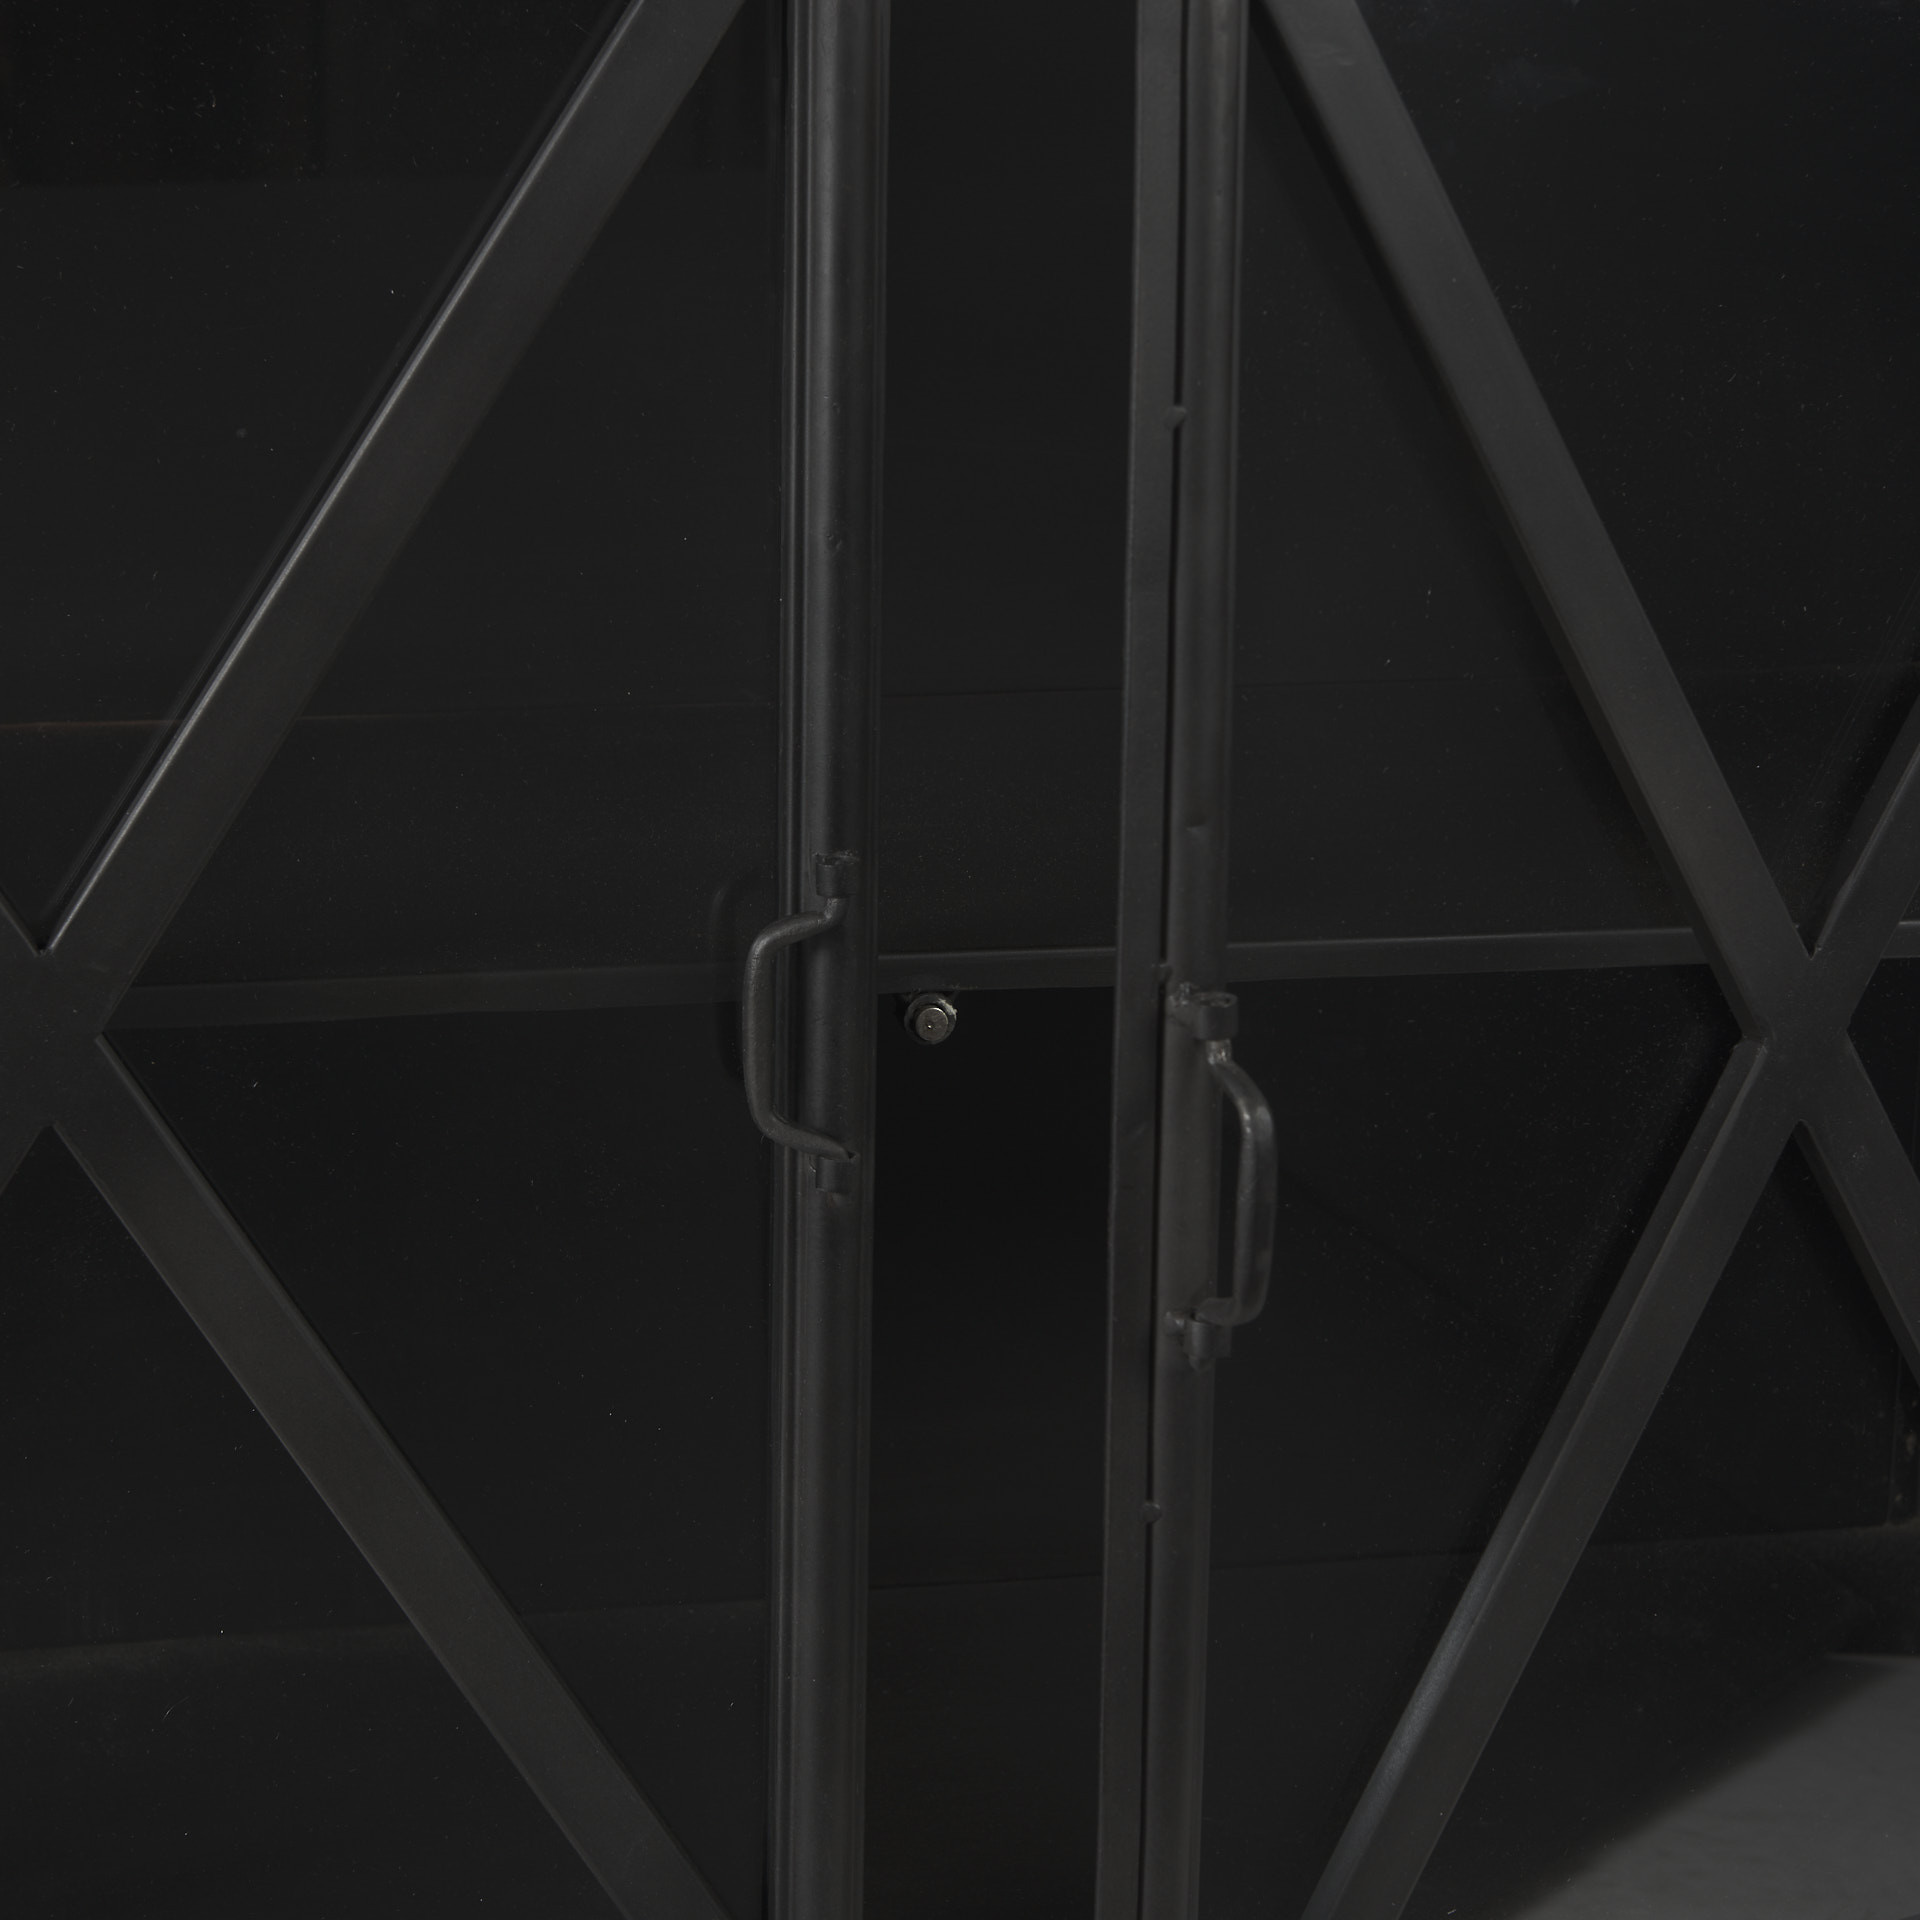 Black Solid Metallic Bronze Finish Sideboard With 4 Glass Cabinet Doors